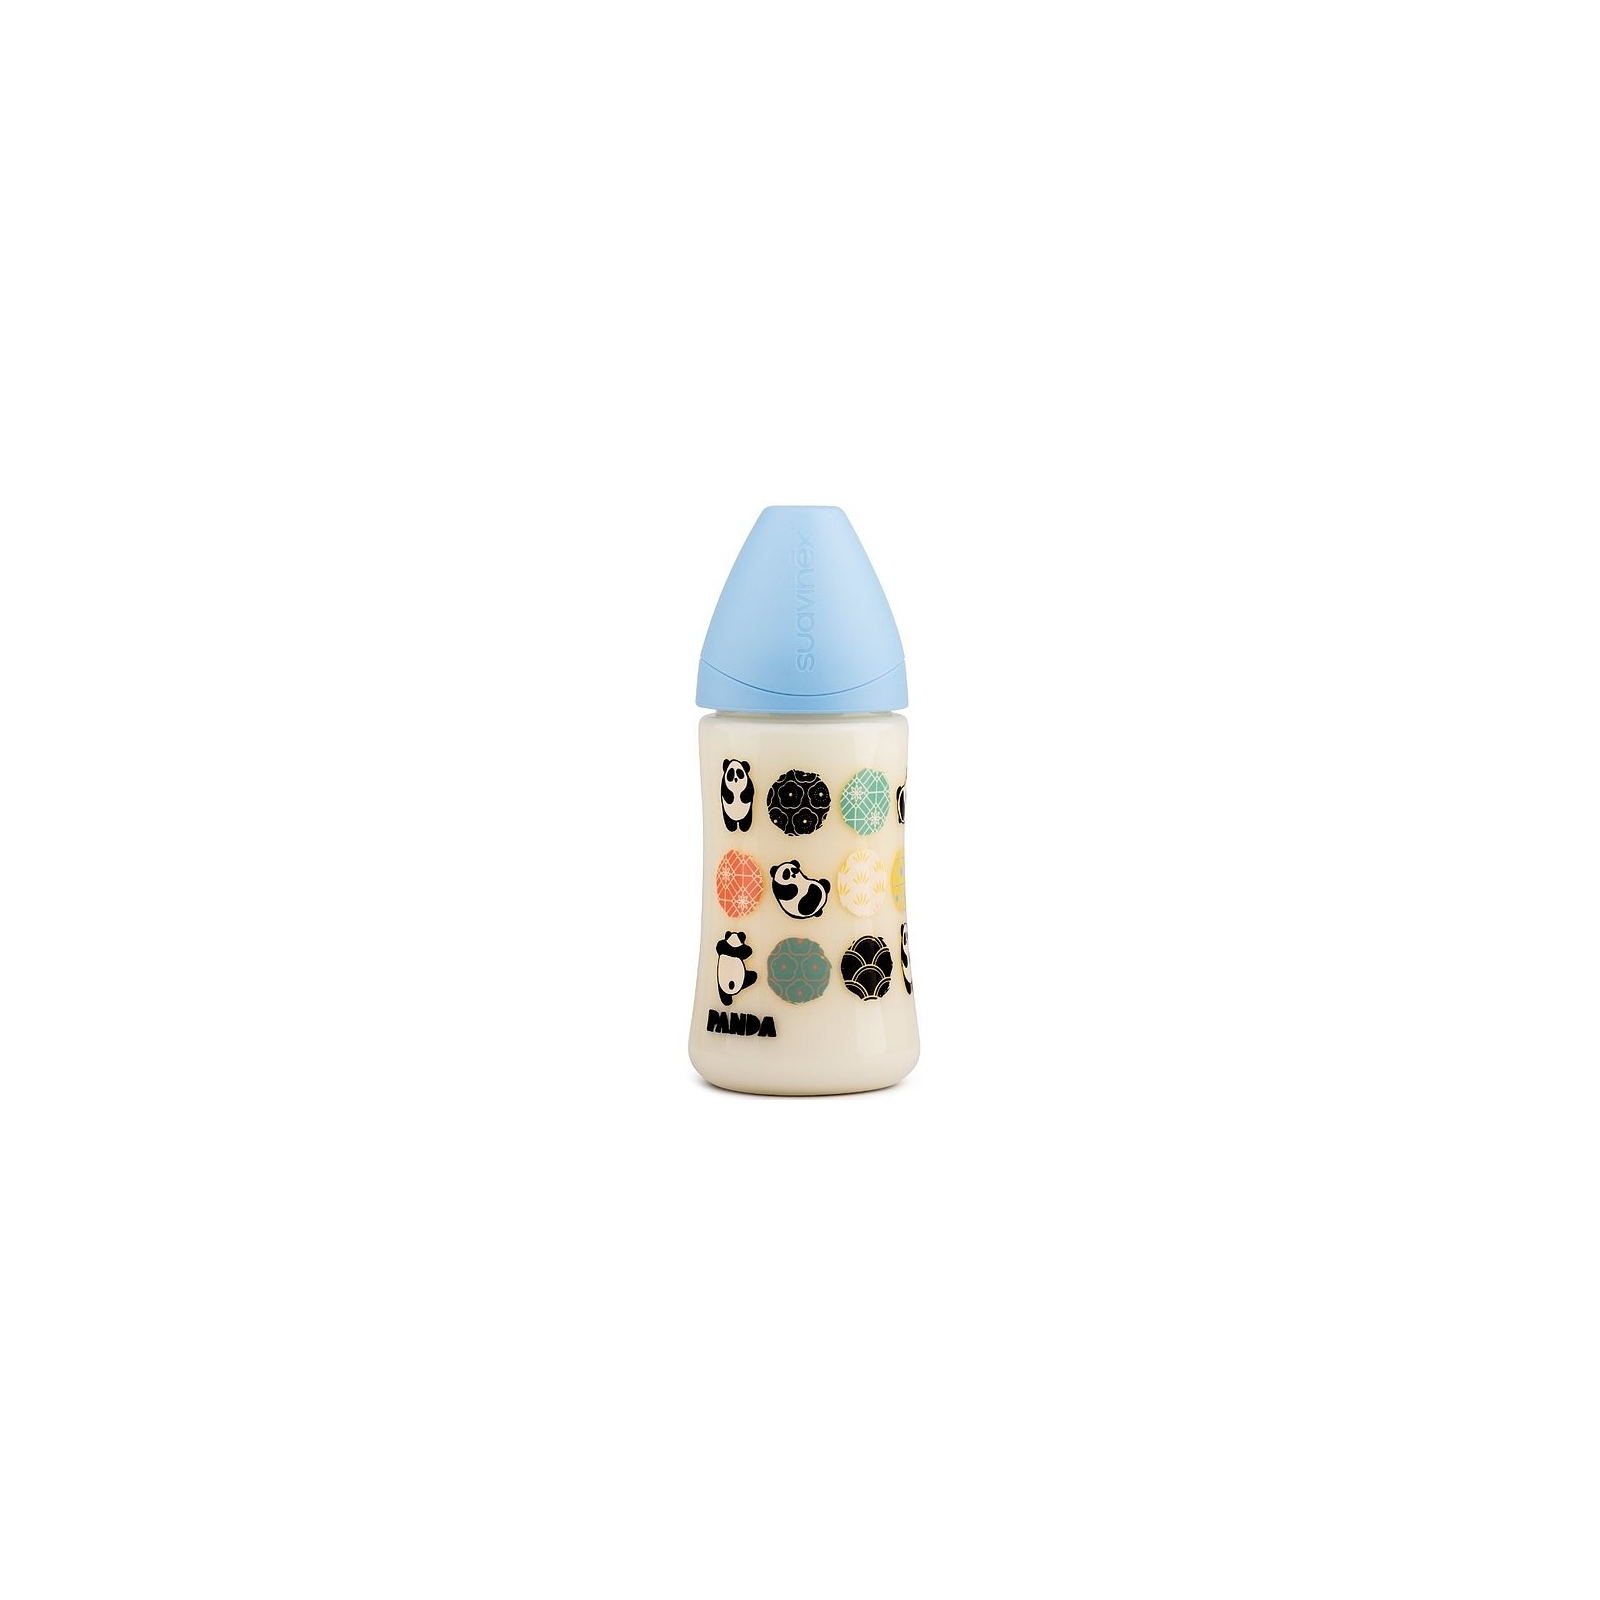 Бутылочка для кормления Suavinex Истории панды, 270 мл, голубая (303976)